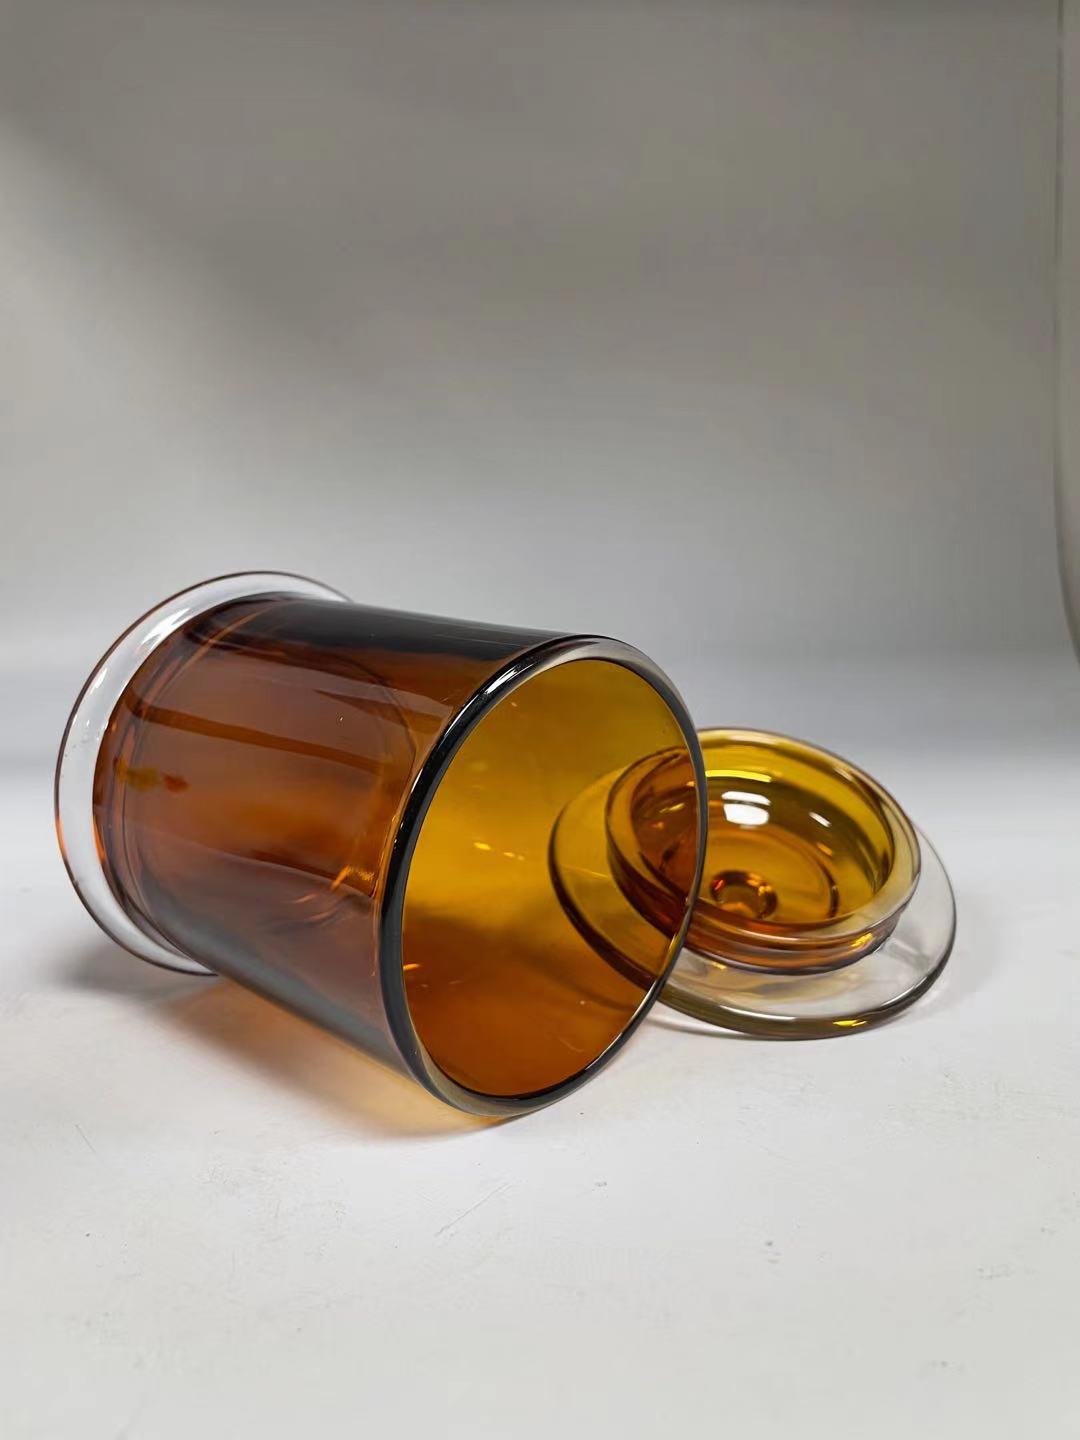 350ml amber glass metro jar from Sunny Glassware